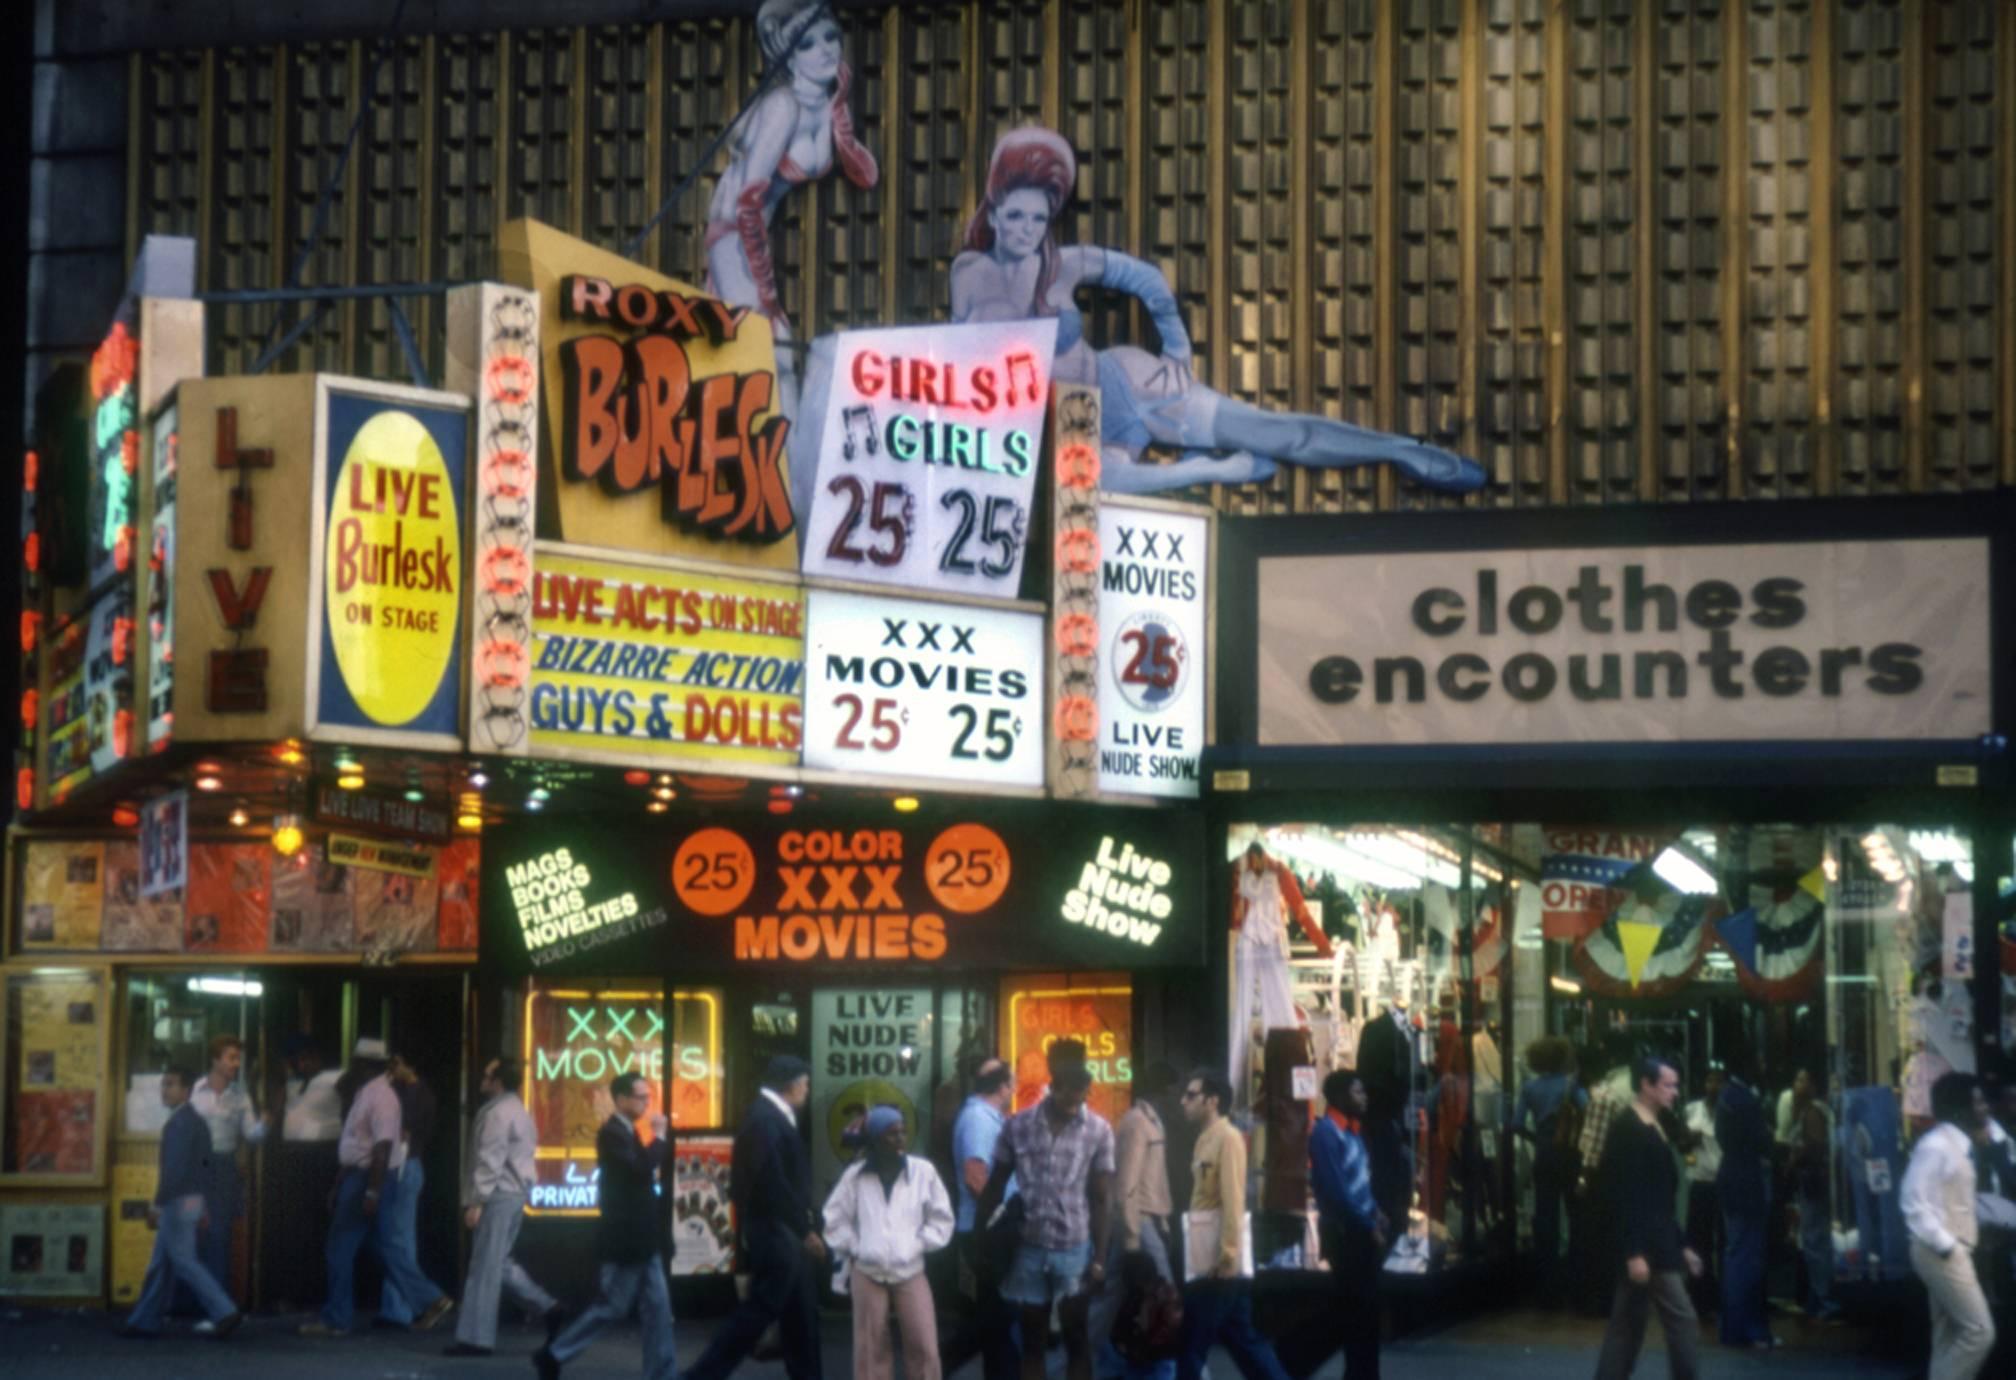 Fernando Natalici Color Photograph - Roxy Burlesque, Times Square photo, New York, 1978